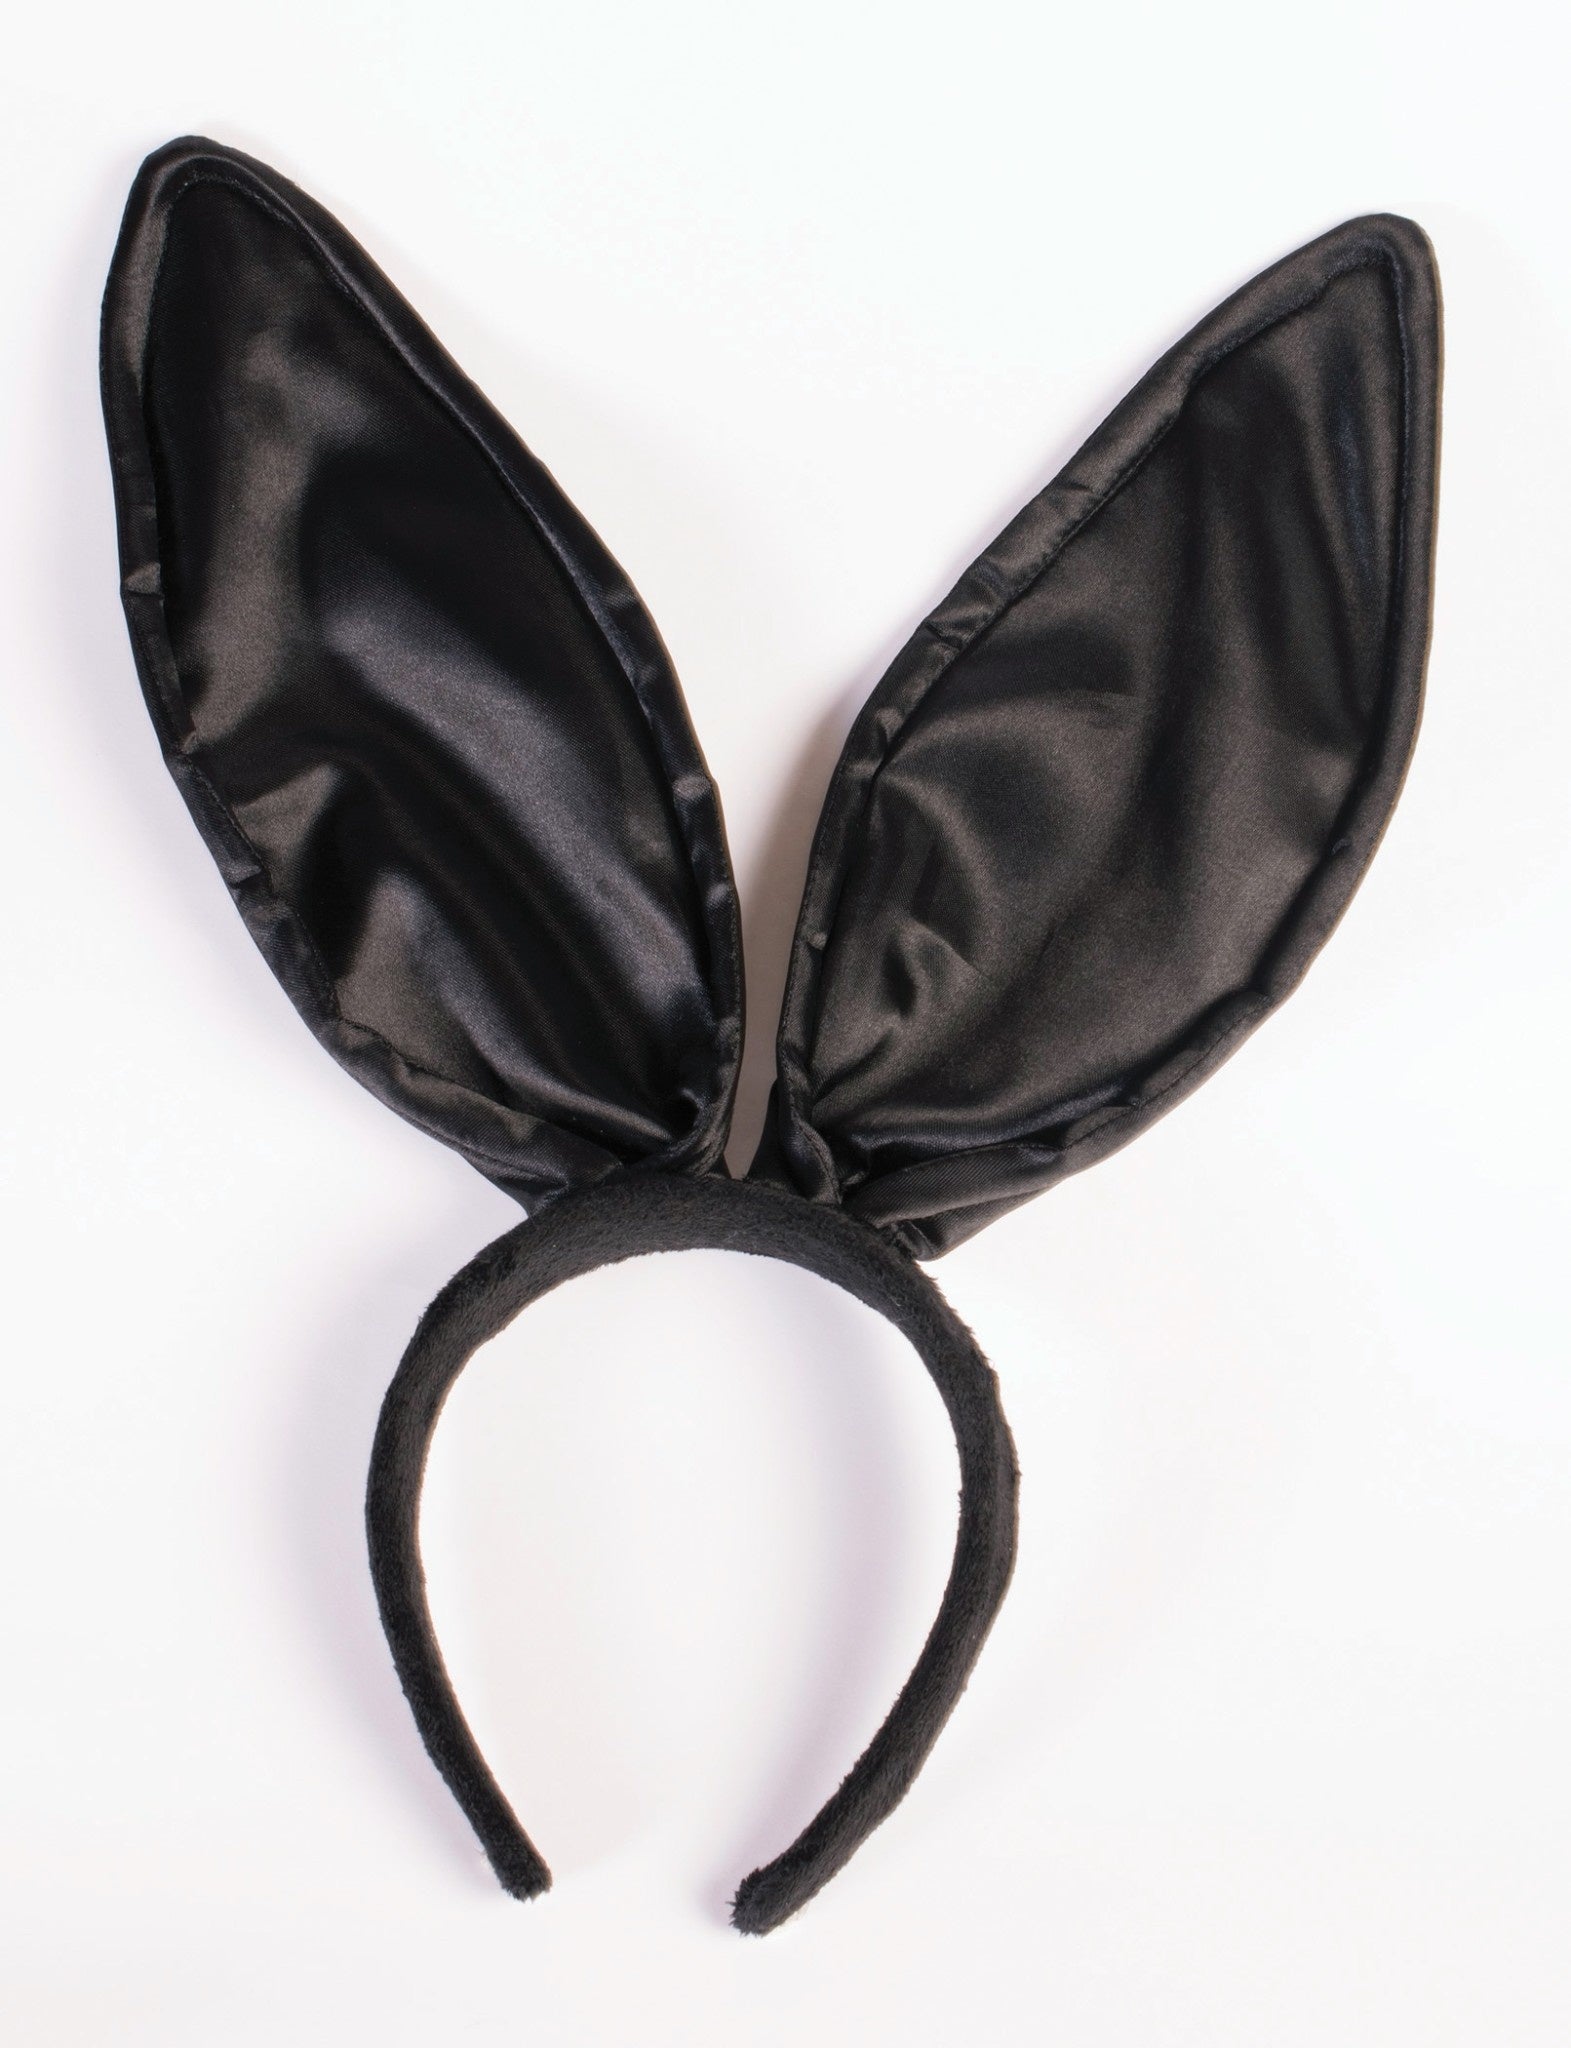 Black satin bunny ears with a headband.